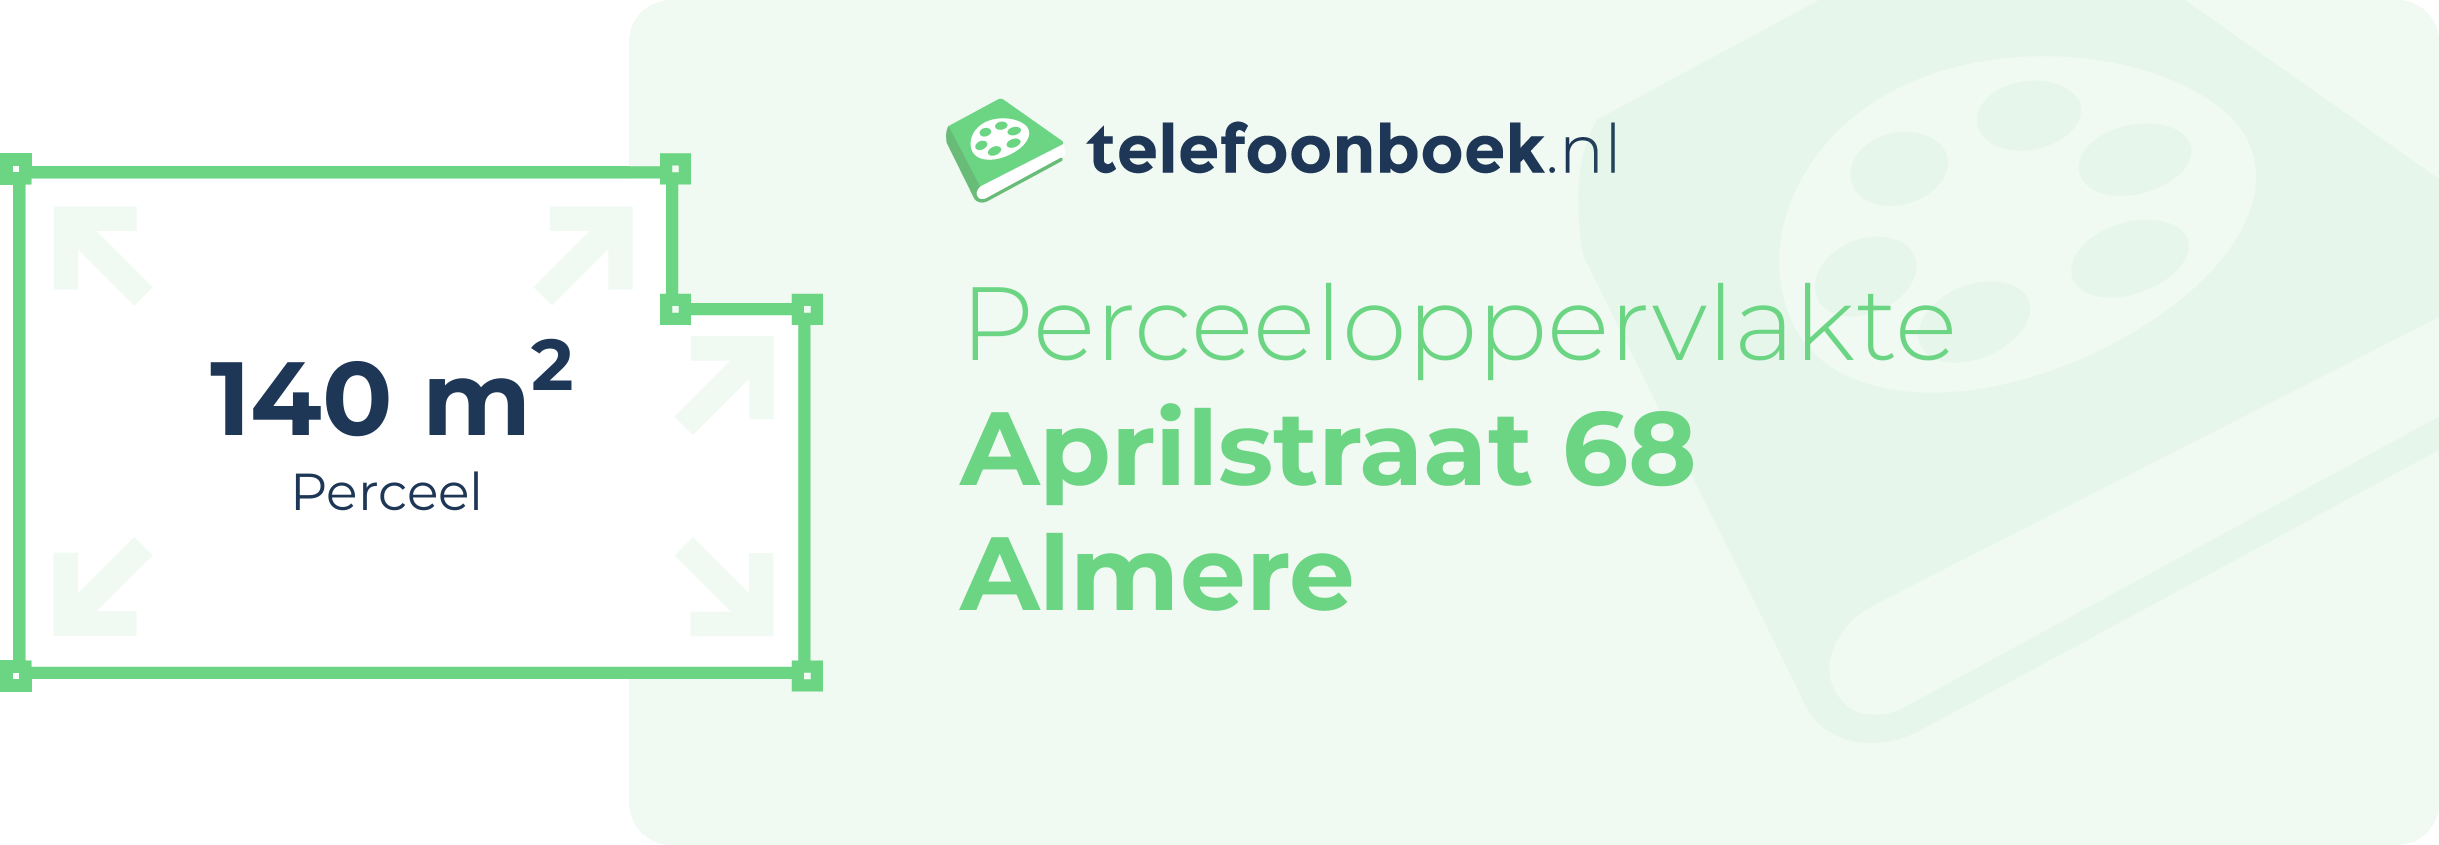 Perceeloppervlakte Aprilstraat 68 Almere